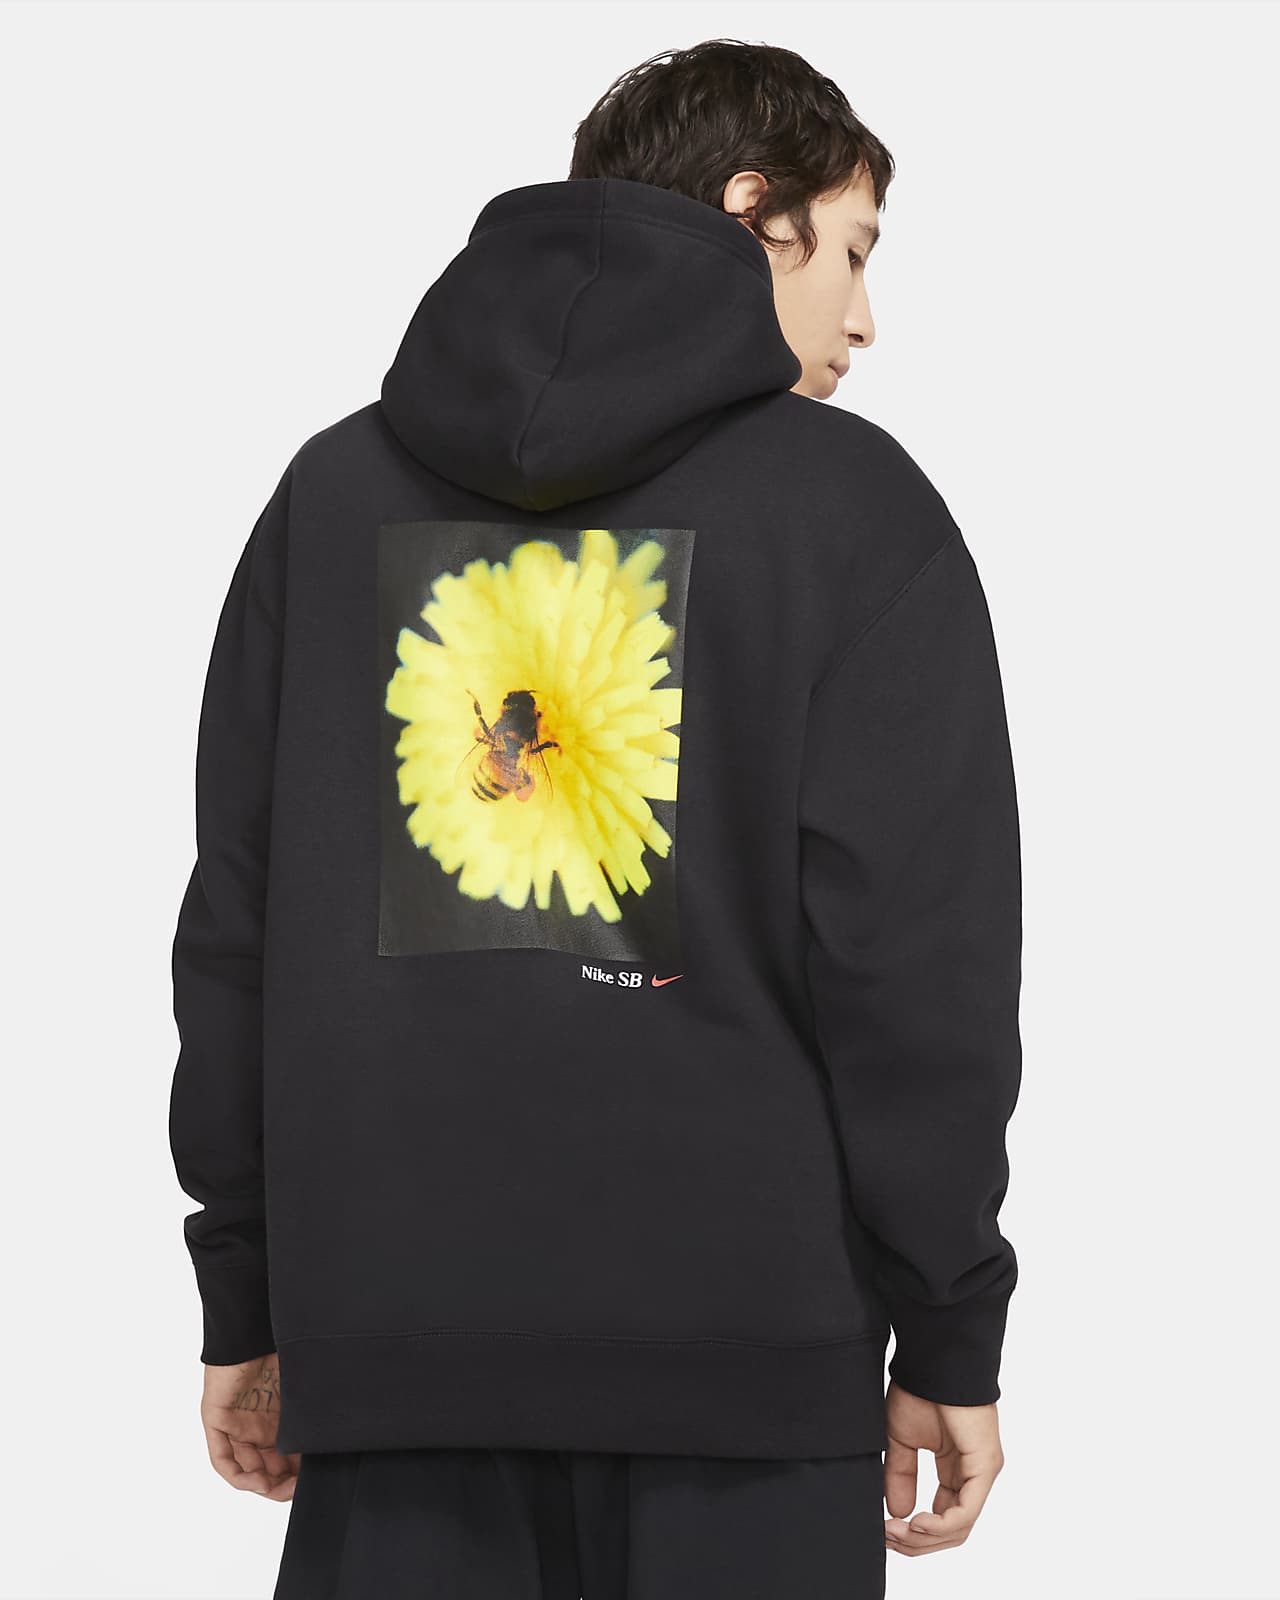 nike sb hoodie icon floral